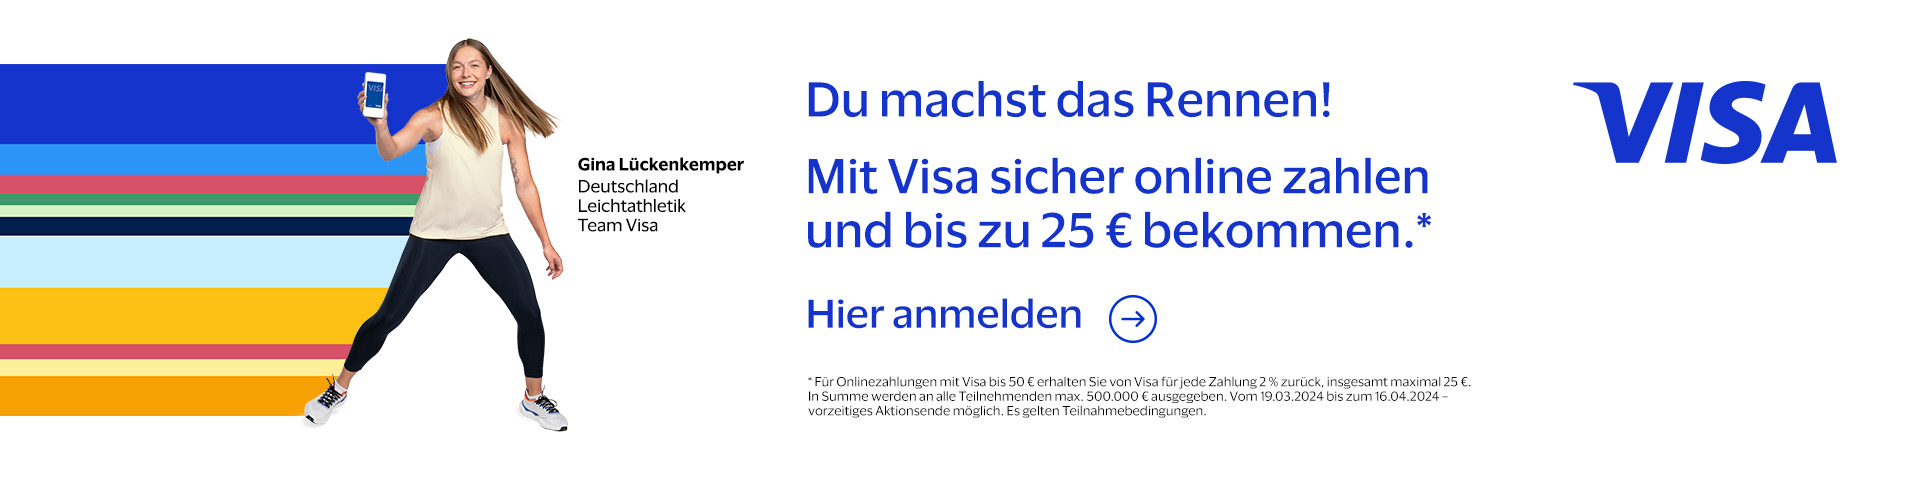 Visa Aktion 2% Cashback